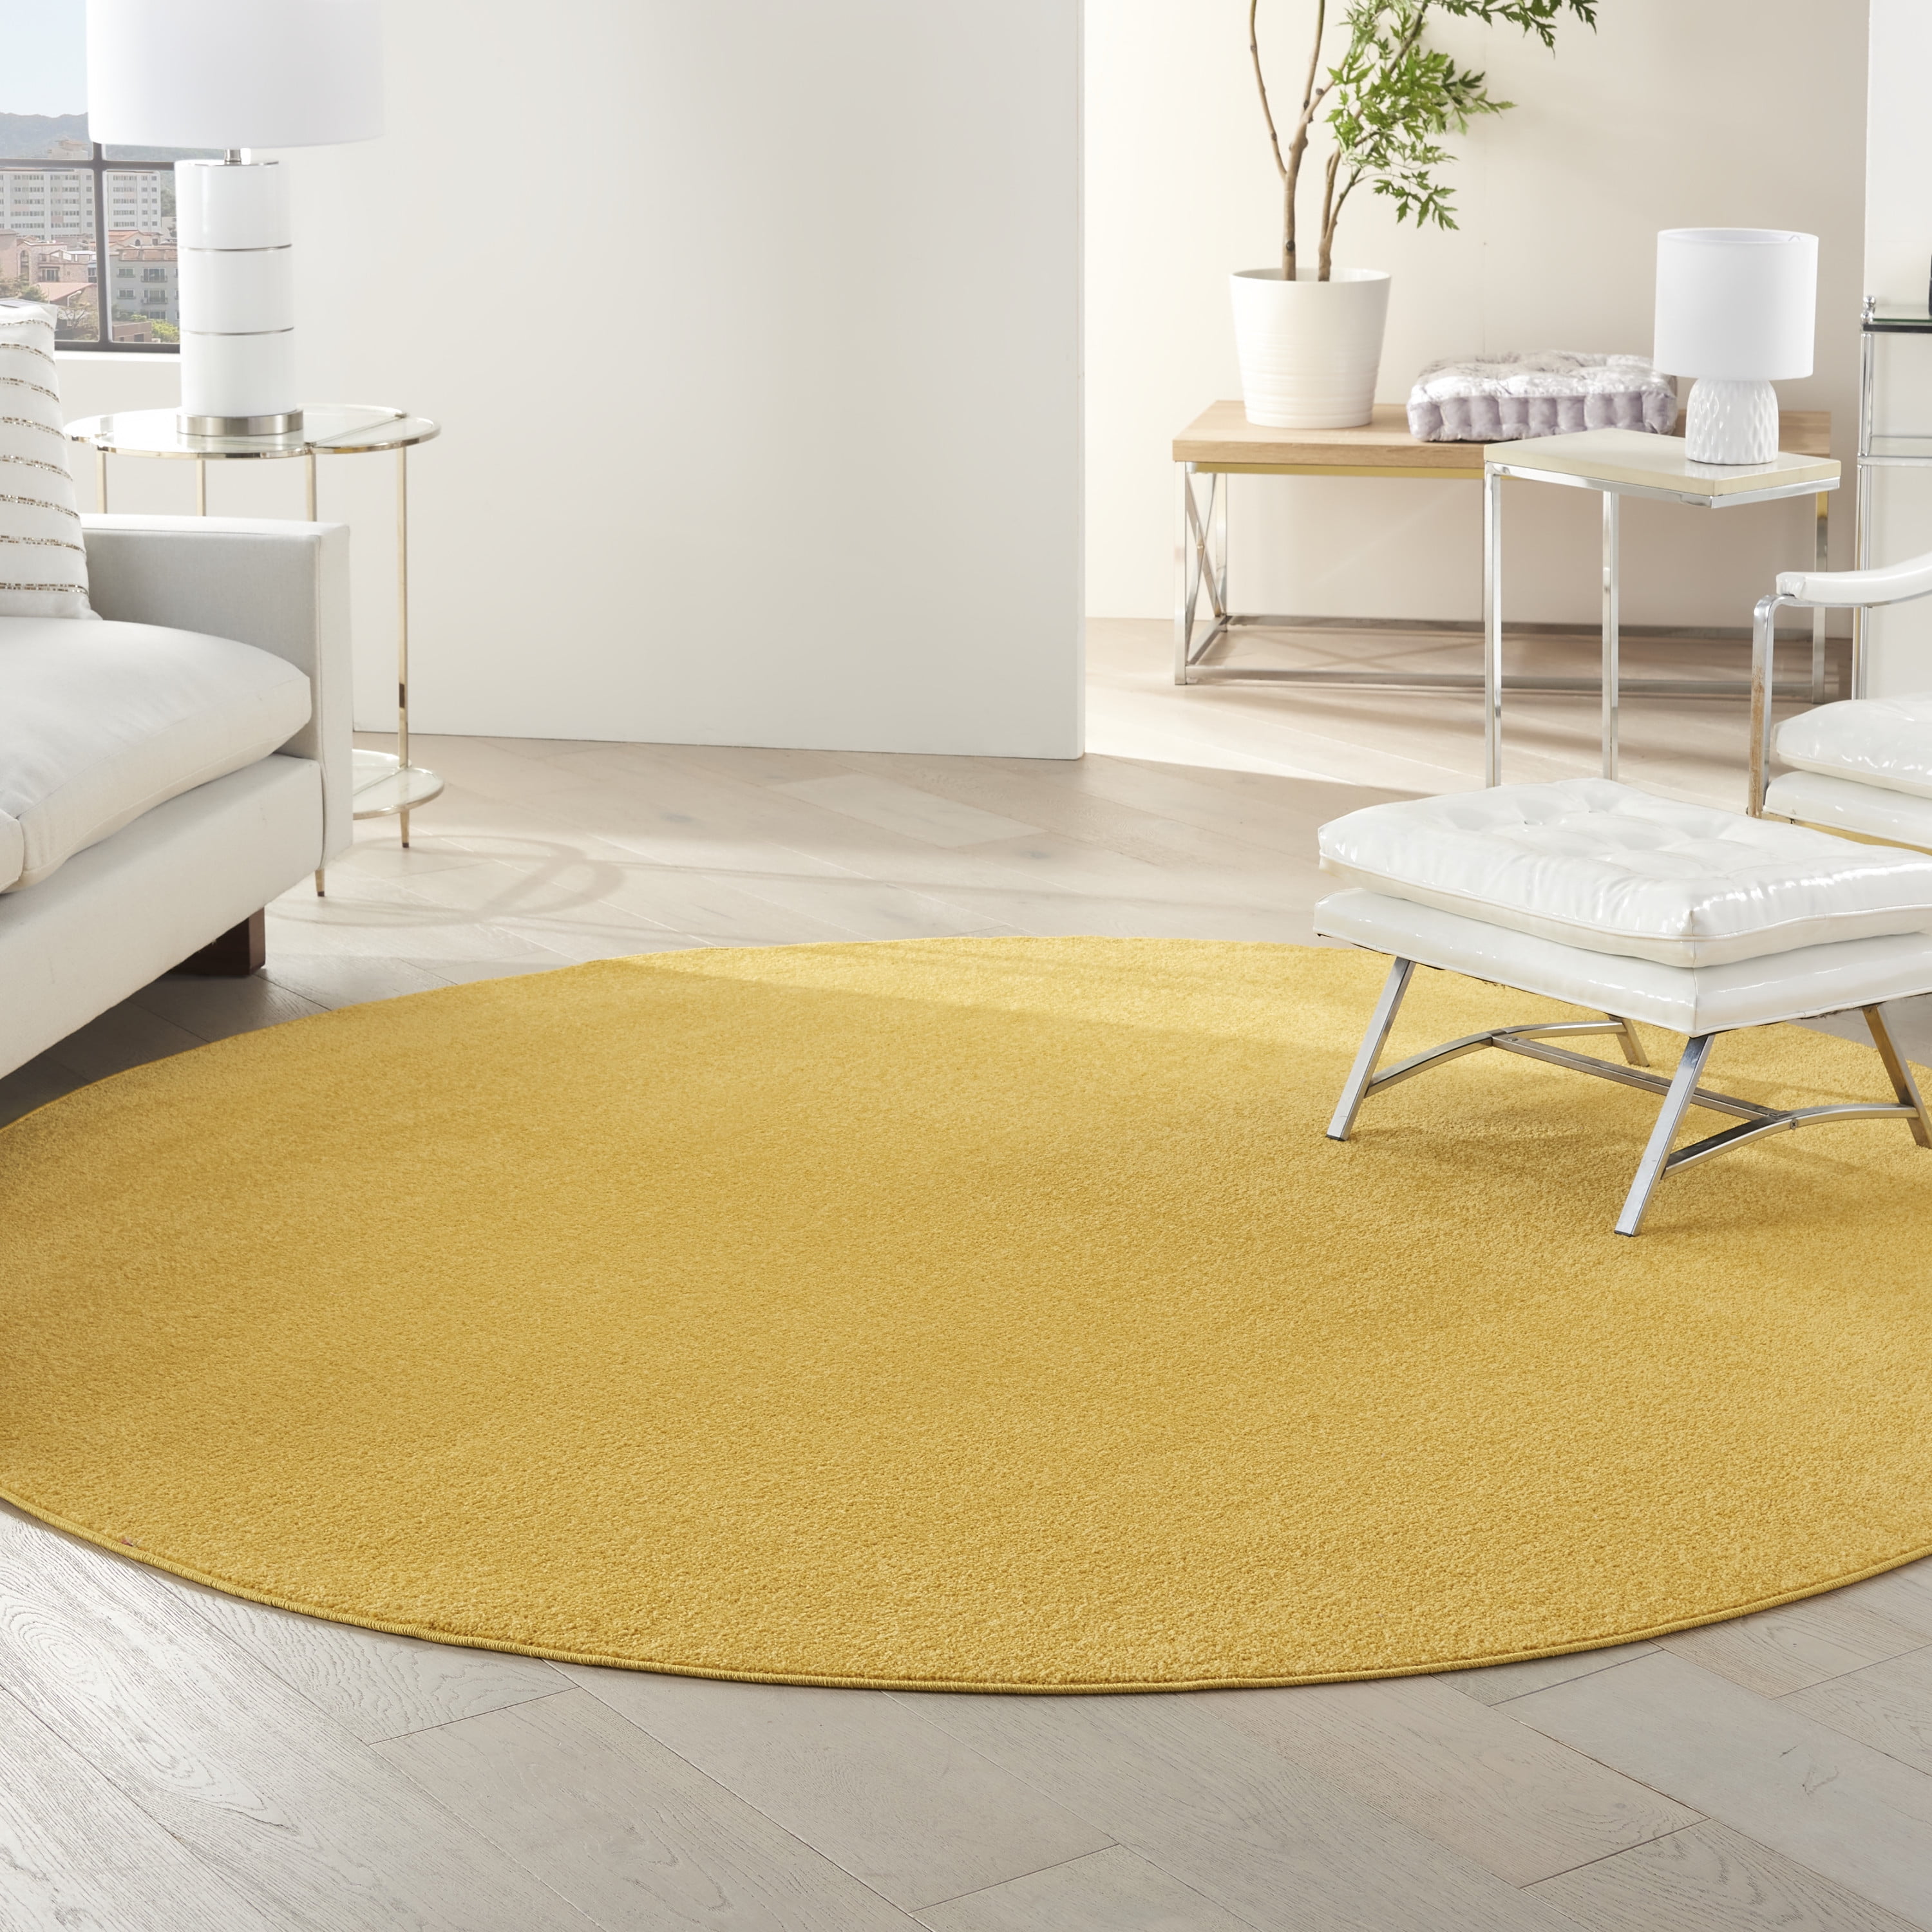 Yoga Round Floor Mat Bedroom Carpet Living Room Area Rugs Yellow Leopard Skin 